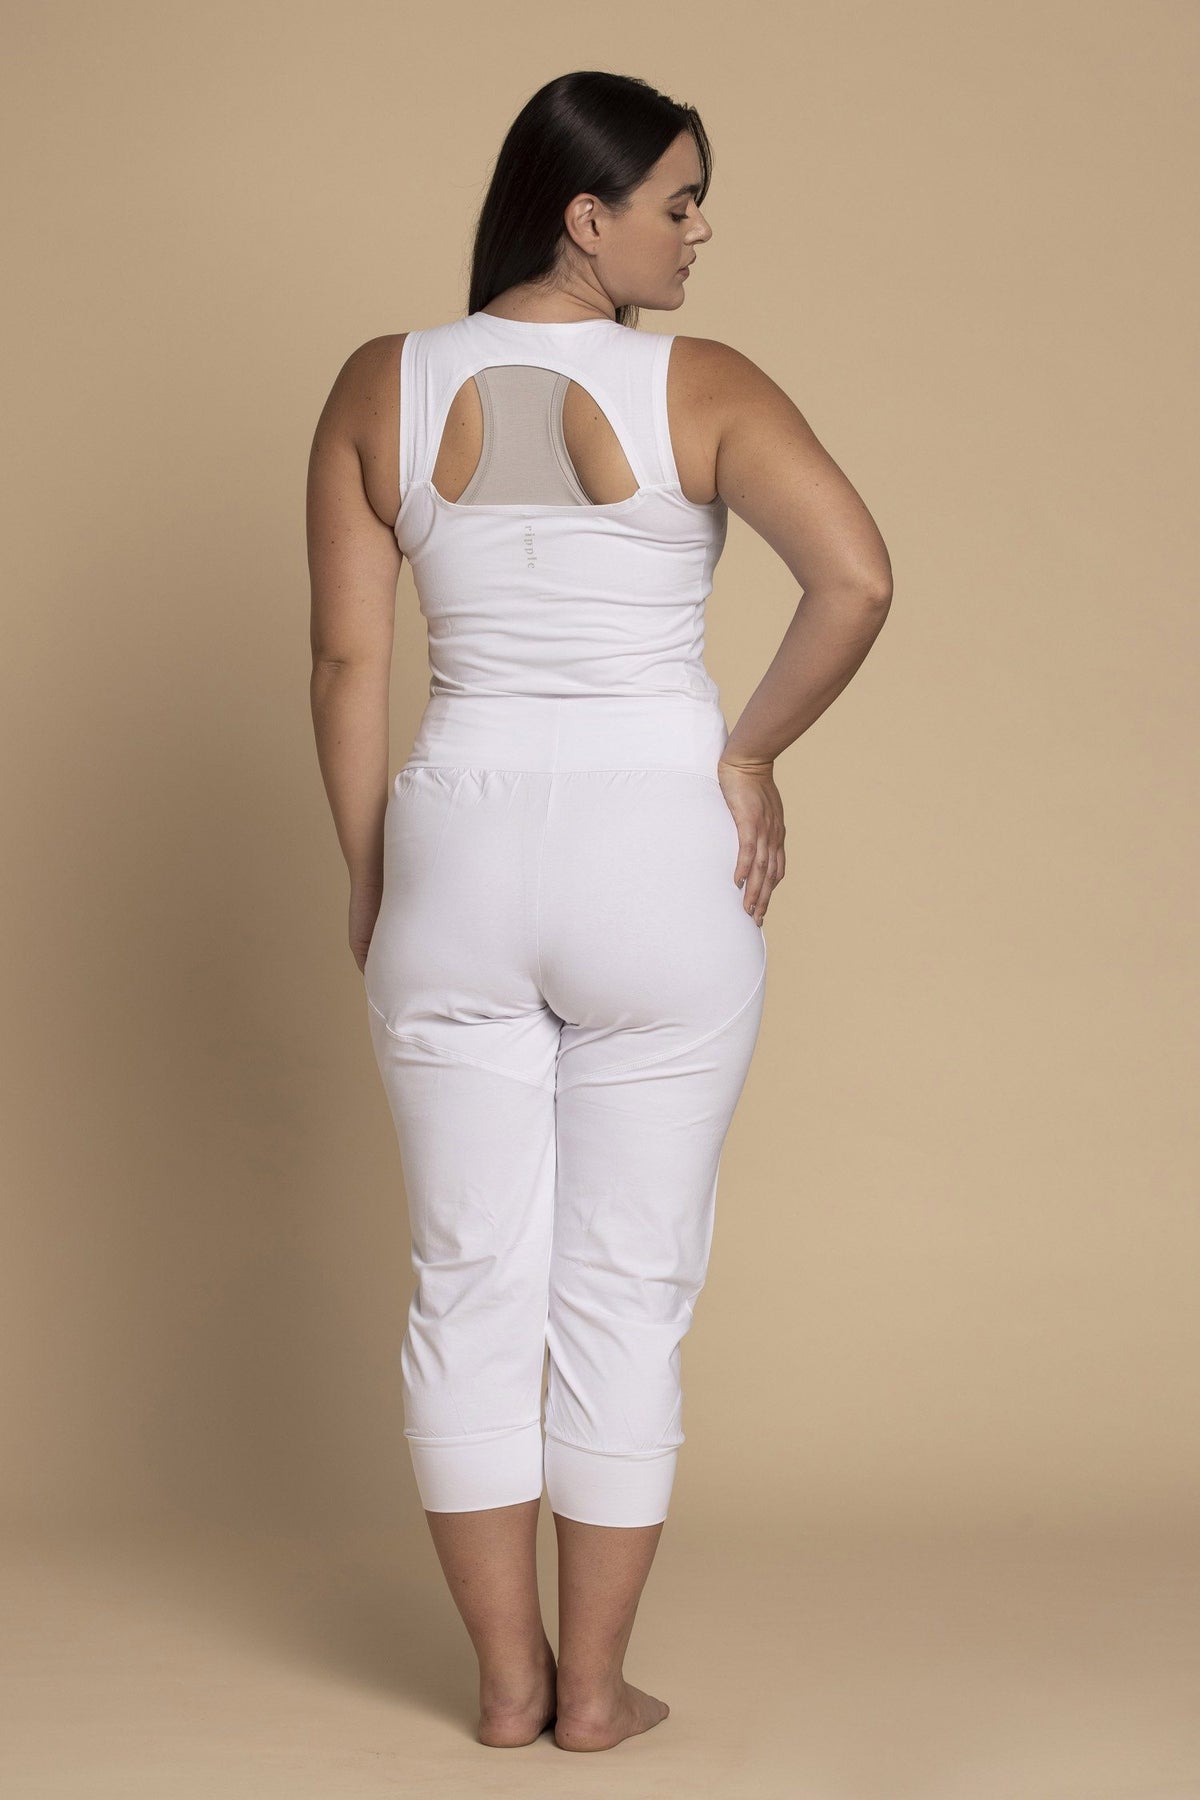 Pure White Slouchy Capri Yoga Pants womens clothing Ripple Yoga Wear 